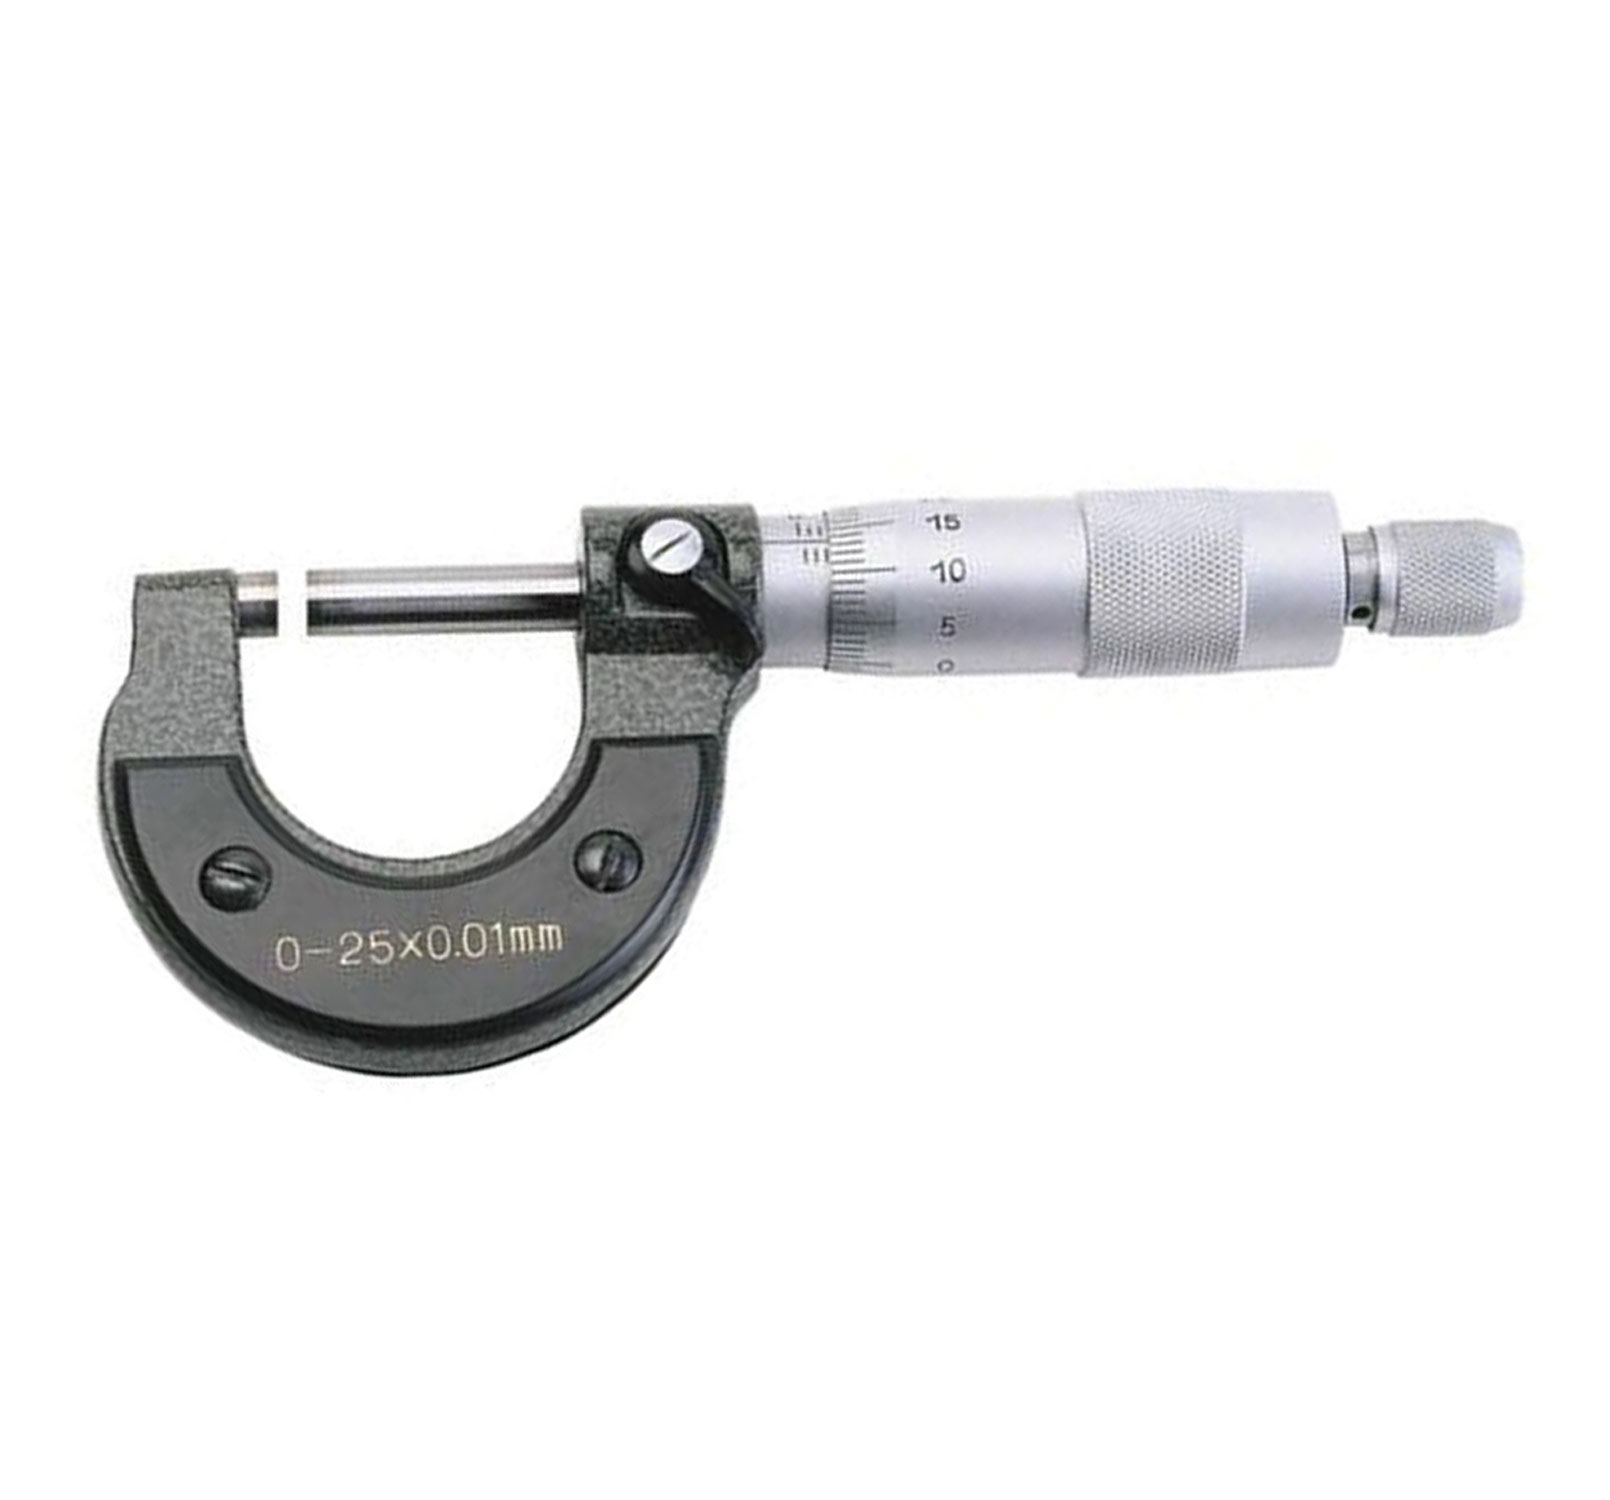 Range 0-25x0.01mm Micrometer Screw Gauge w/Lock Nickel Plated Brass 